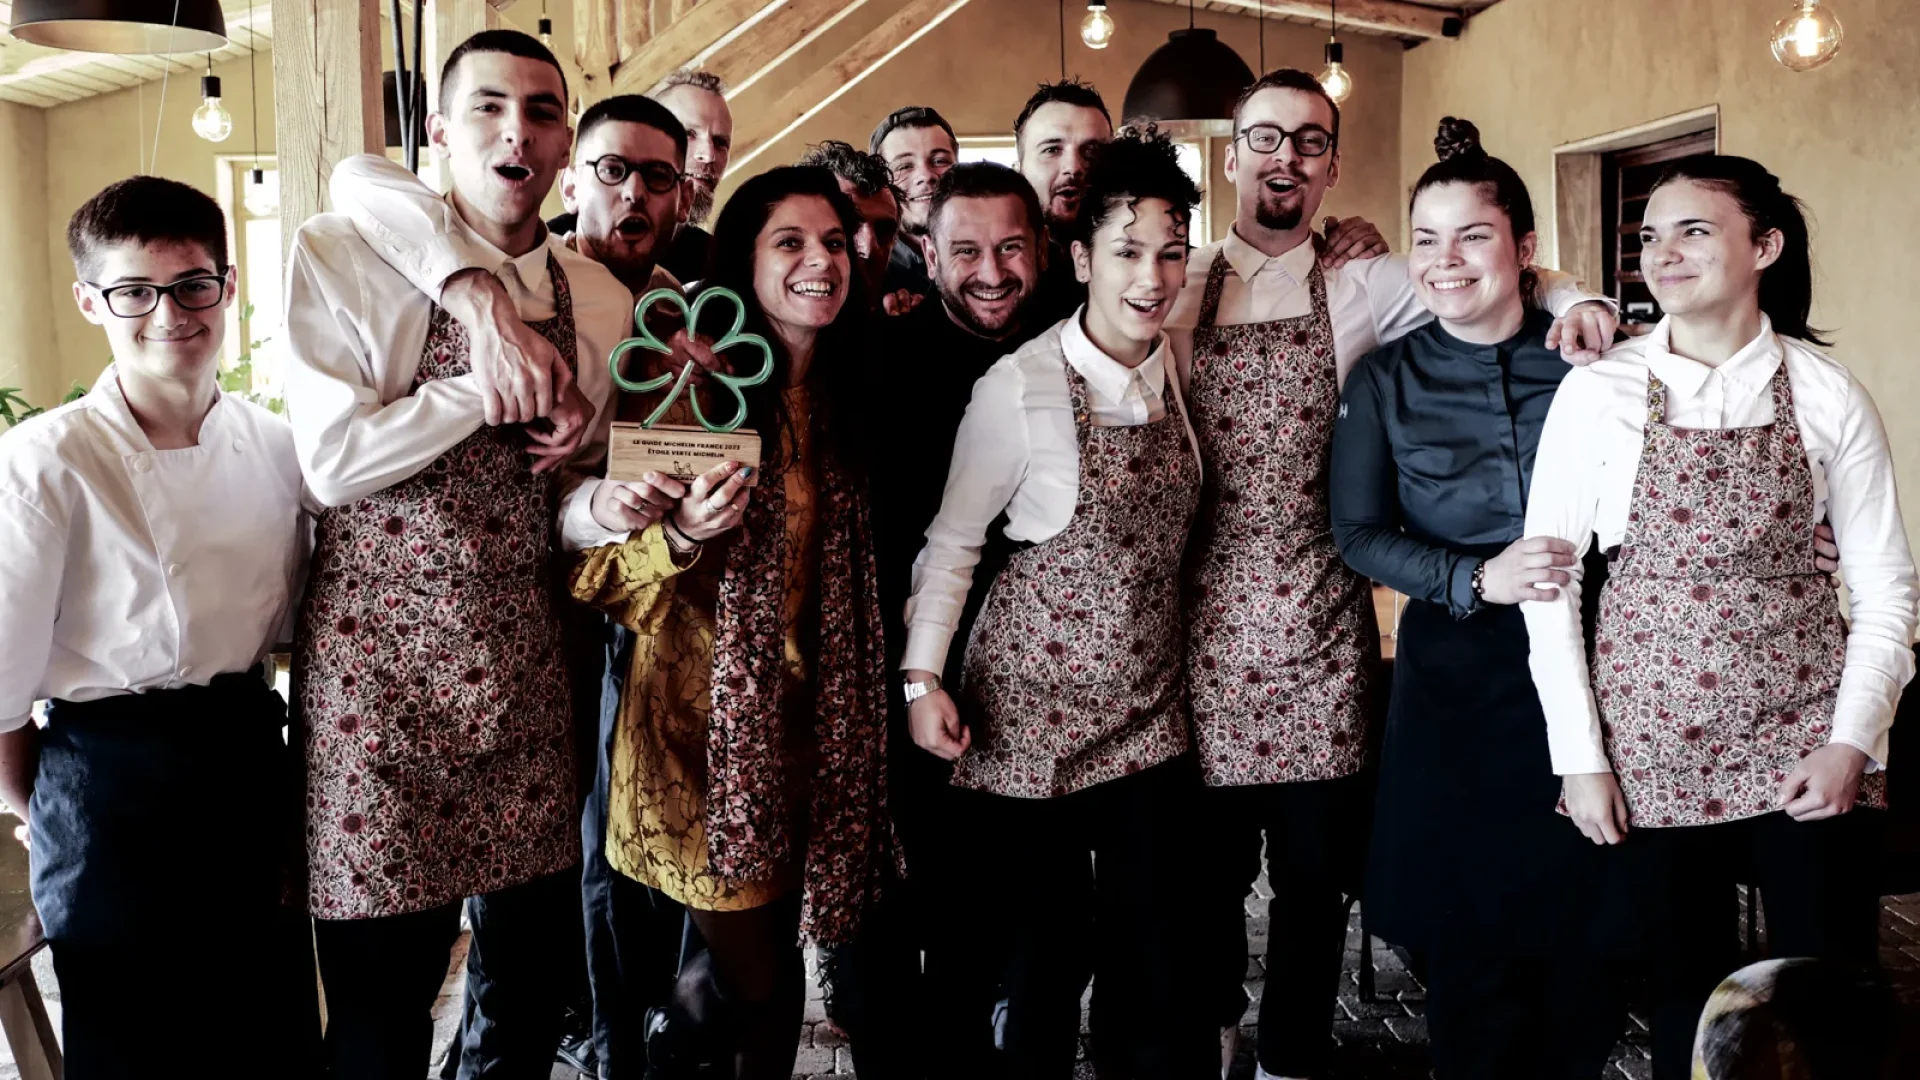 Equipe du restaurant "La Boria" avec leur étoile verte Michelin